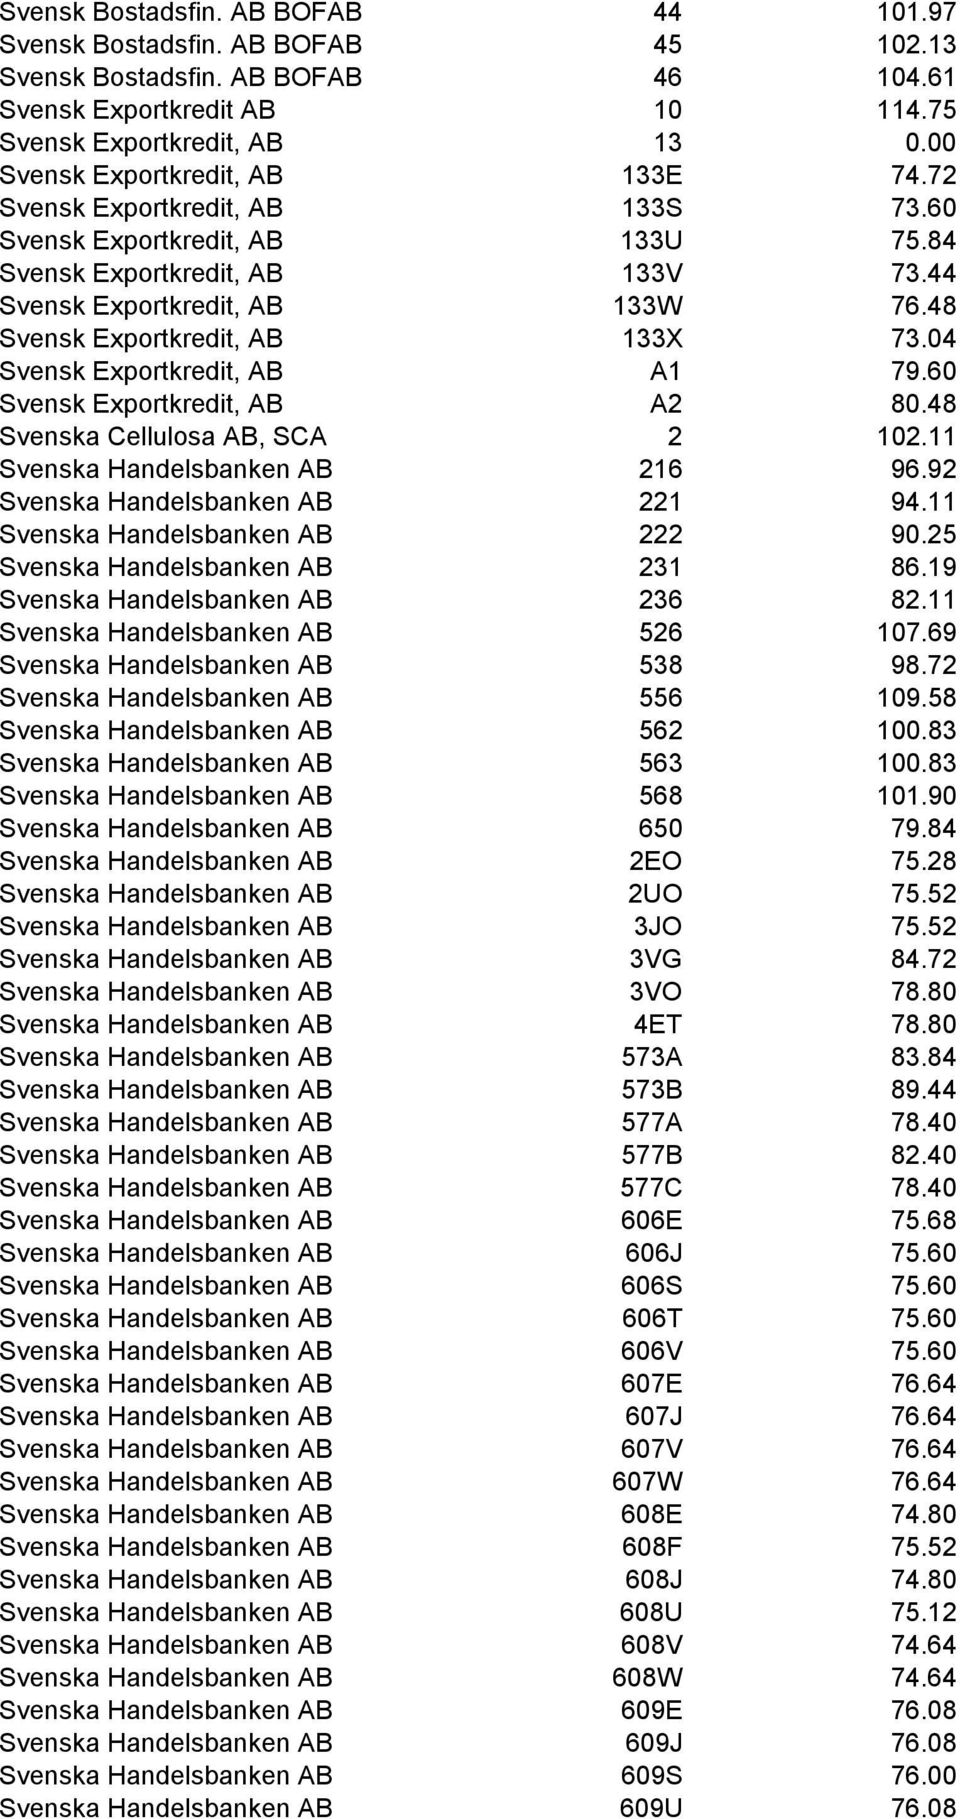 48 Svensk Exportkredit, AB 133X 73.04 Svensk Exportkredit, AB A1 79.60 Svensk Exportkredit, AB A2 80.48 Svenska Cellulosa AB, SCA 2 102.11 Svenska Handelsbanken AB 216 96.